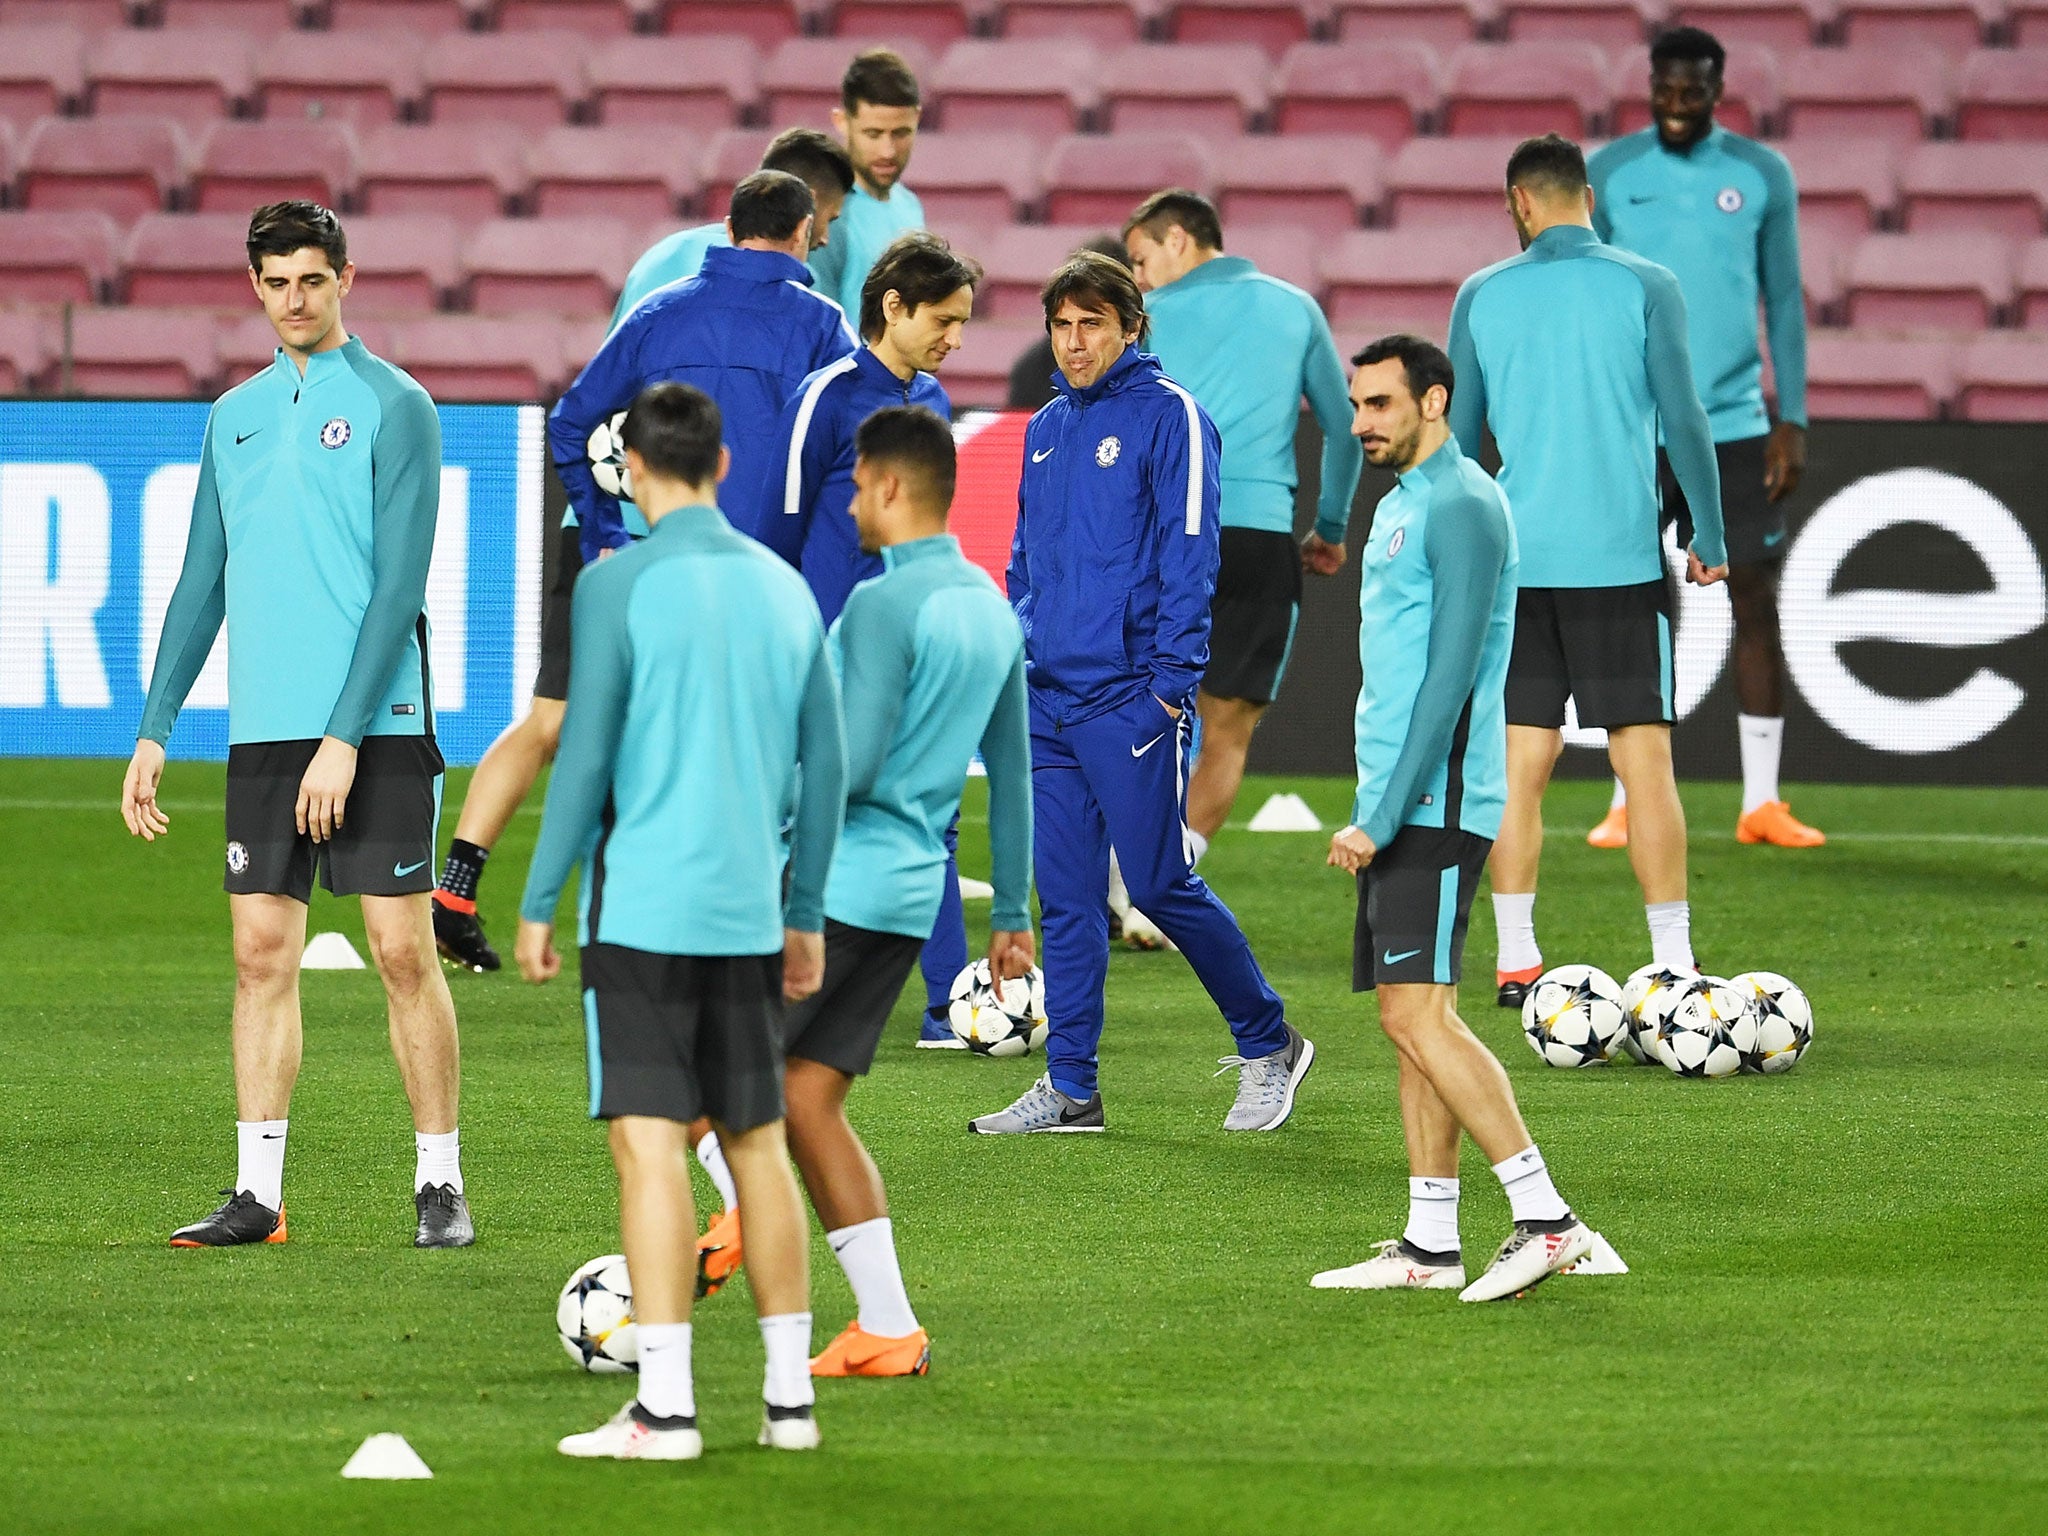 Antonio Conte with his men in training ahead of the clash